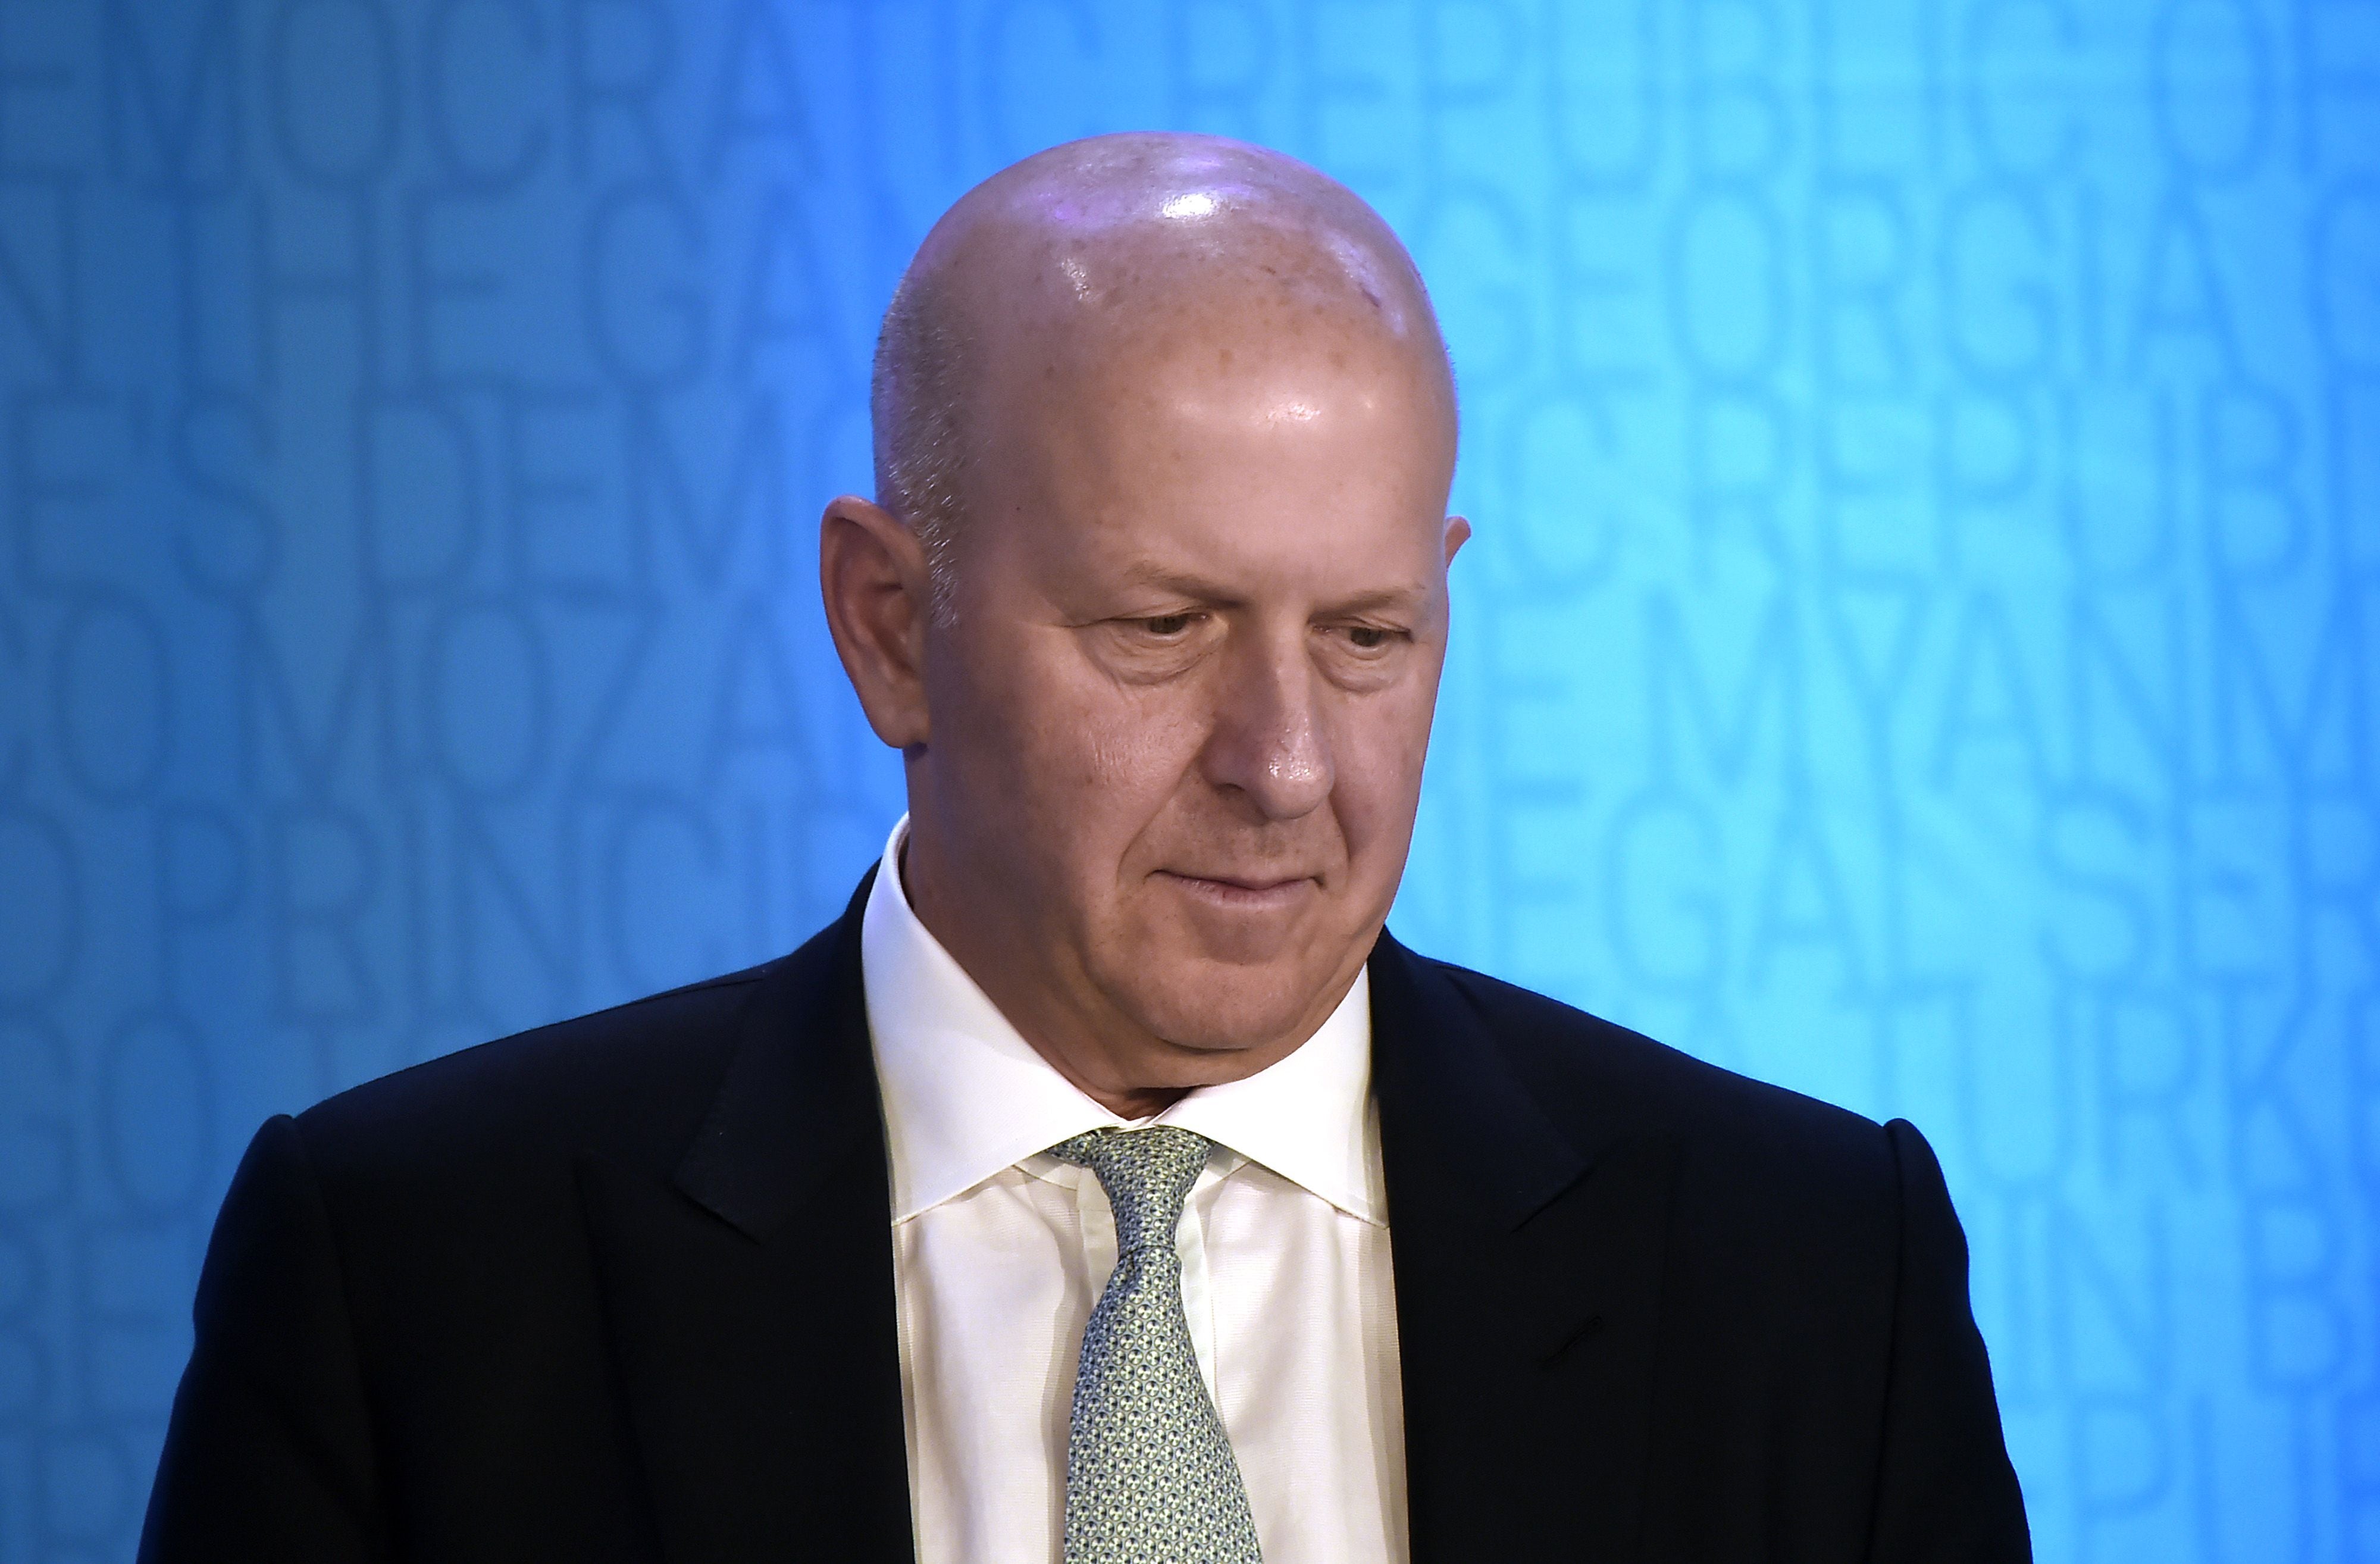 David Solomon, the chair and chief executive of Goldman Sachs